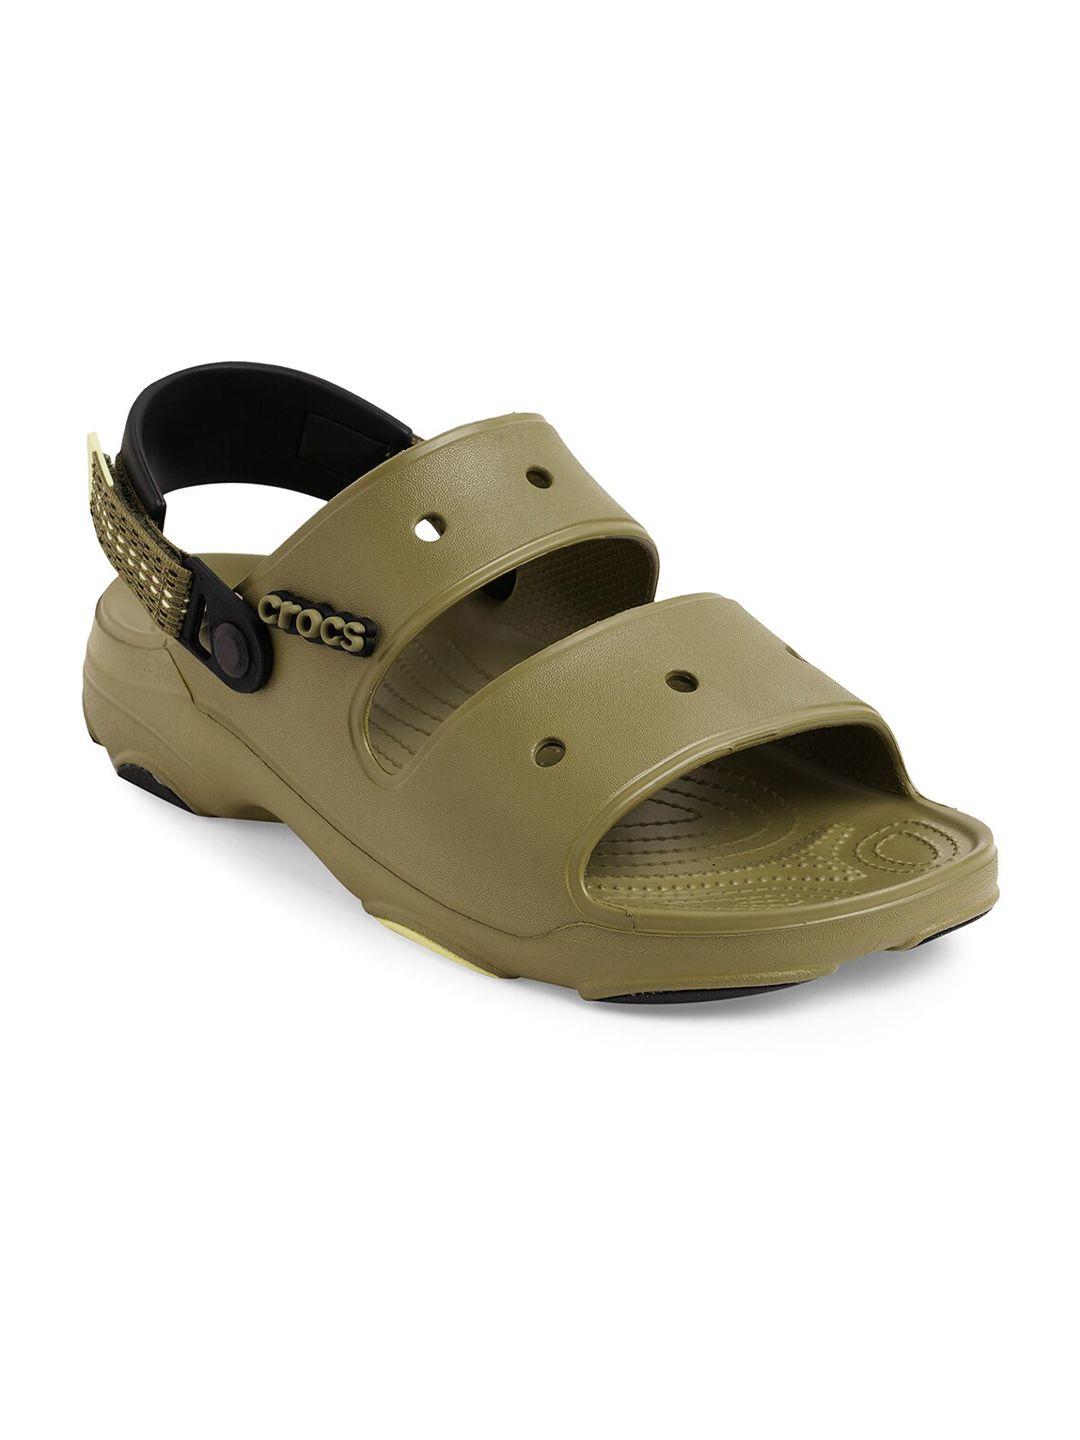 crocs unisex olive green solid comfort sandals